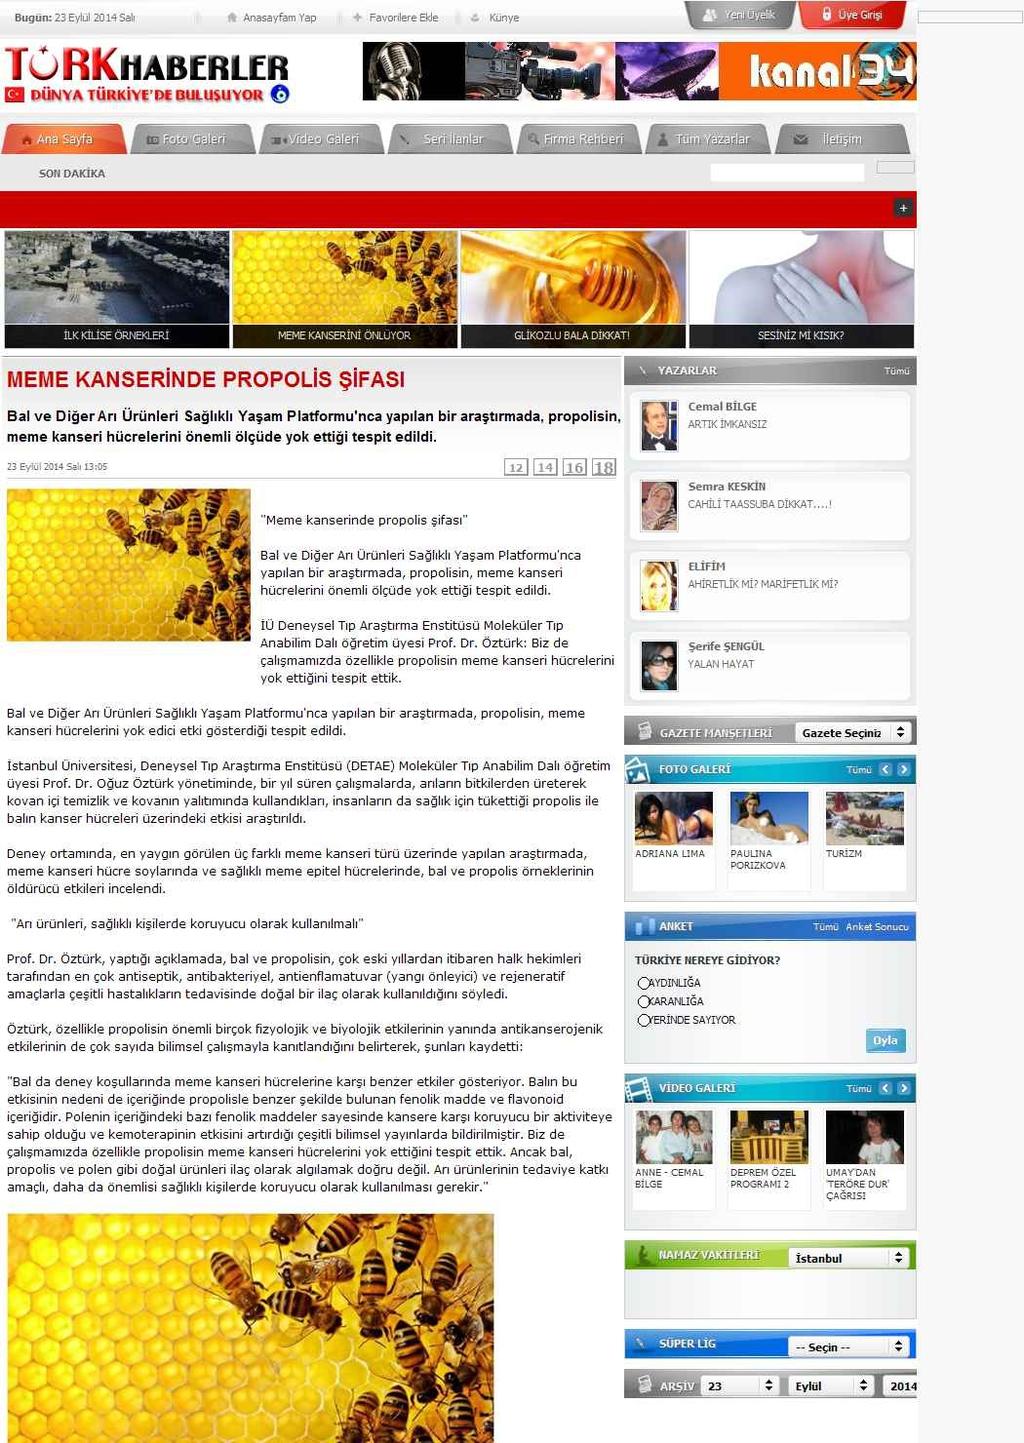 Portal Adres MEME KANSERINDE PROPOLIS SIFASI : www.turkhaberler.